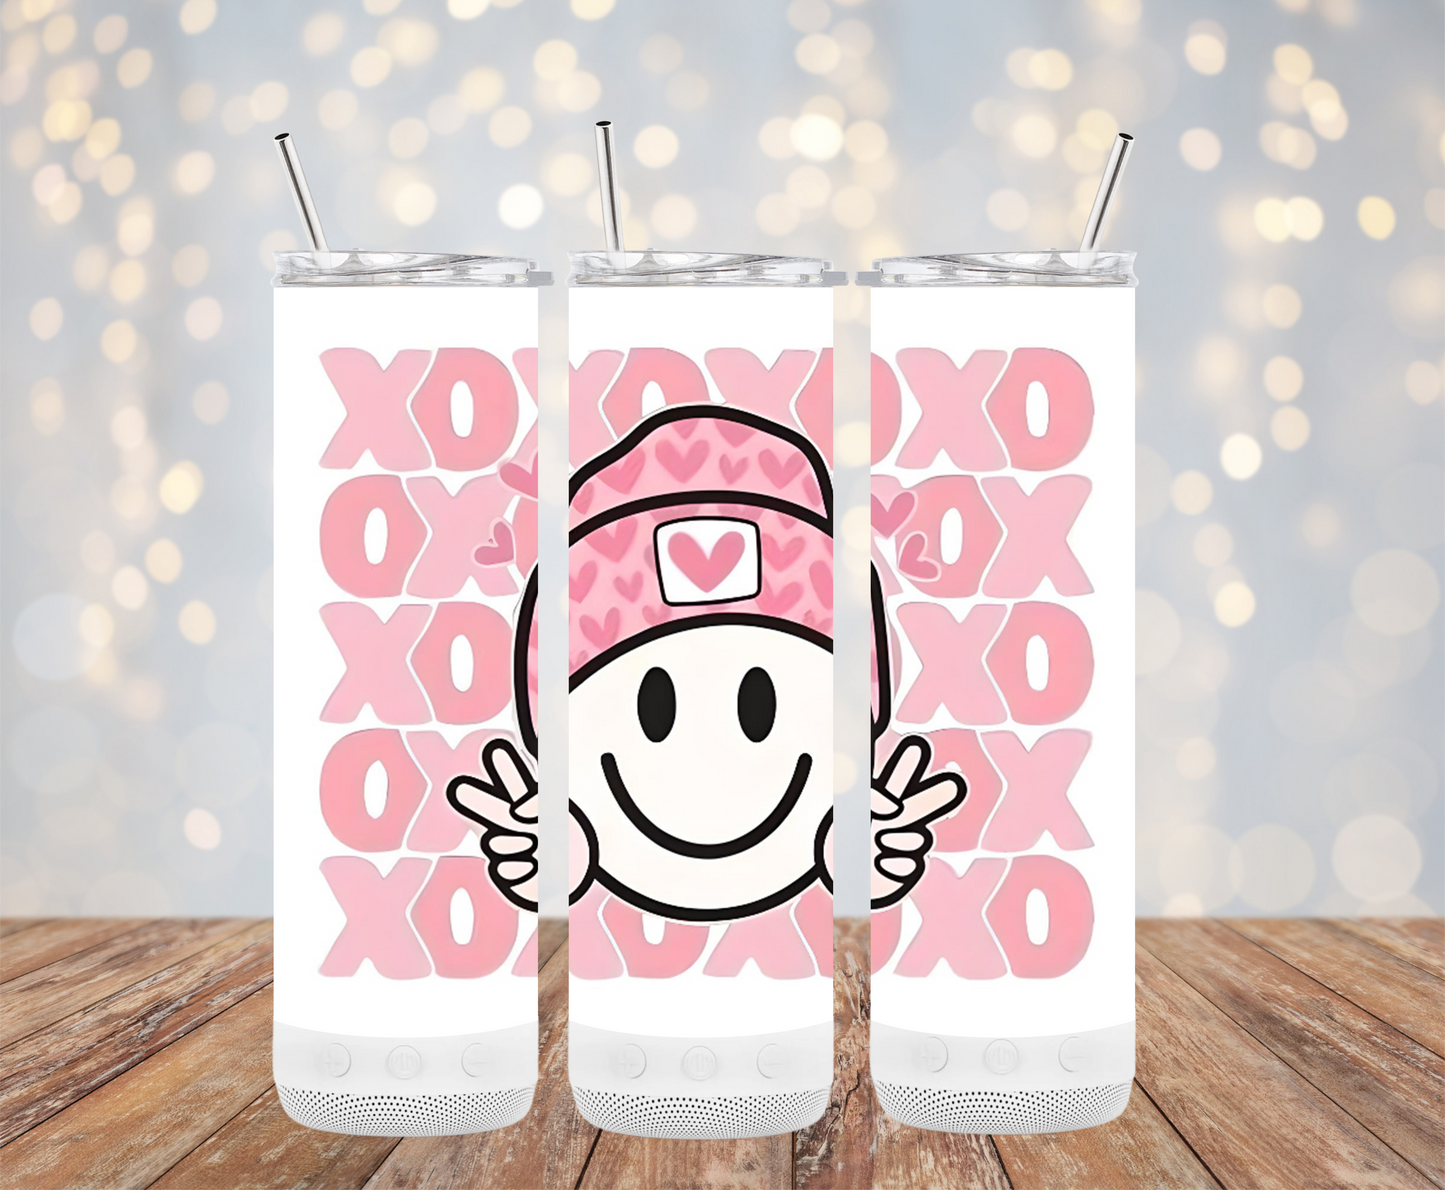 XOXOXO (Valentine Tumbler)